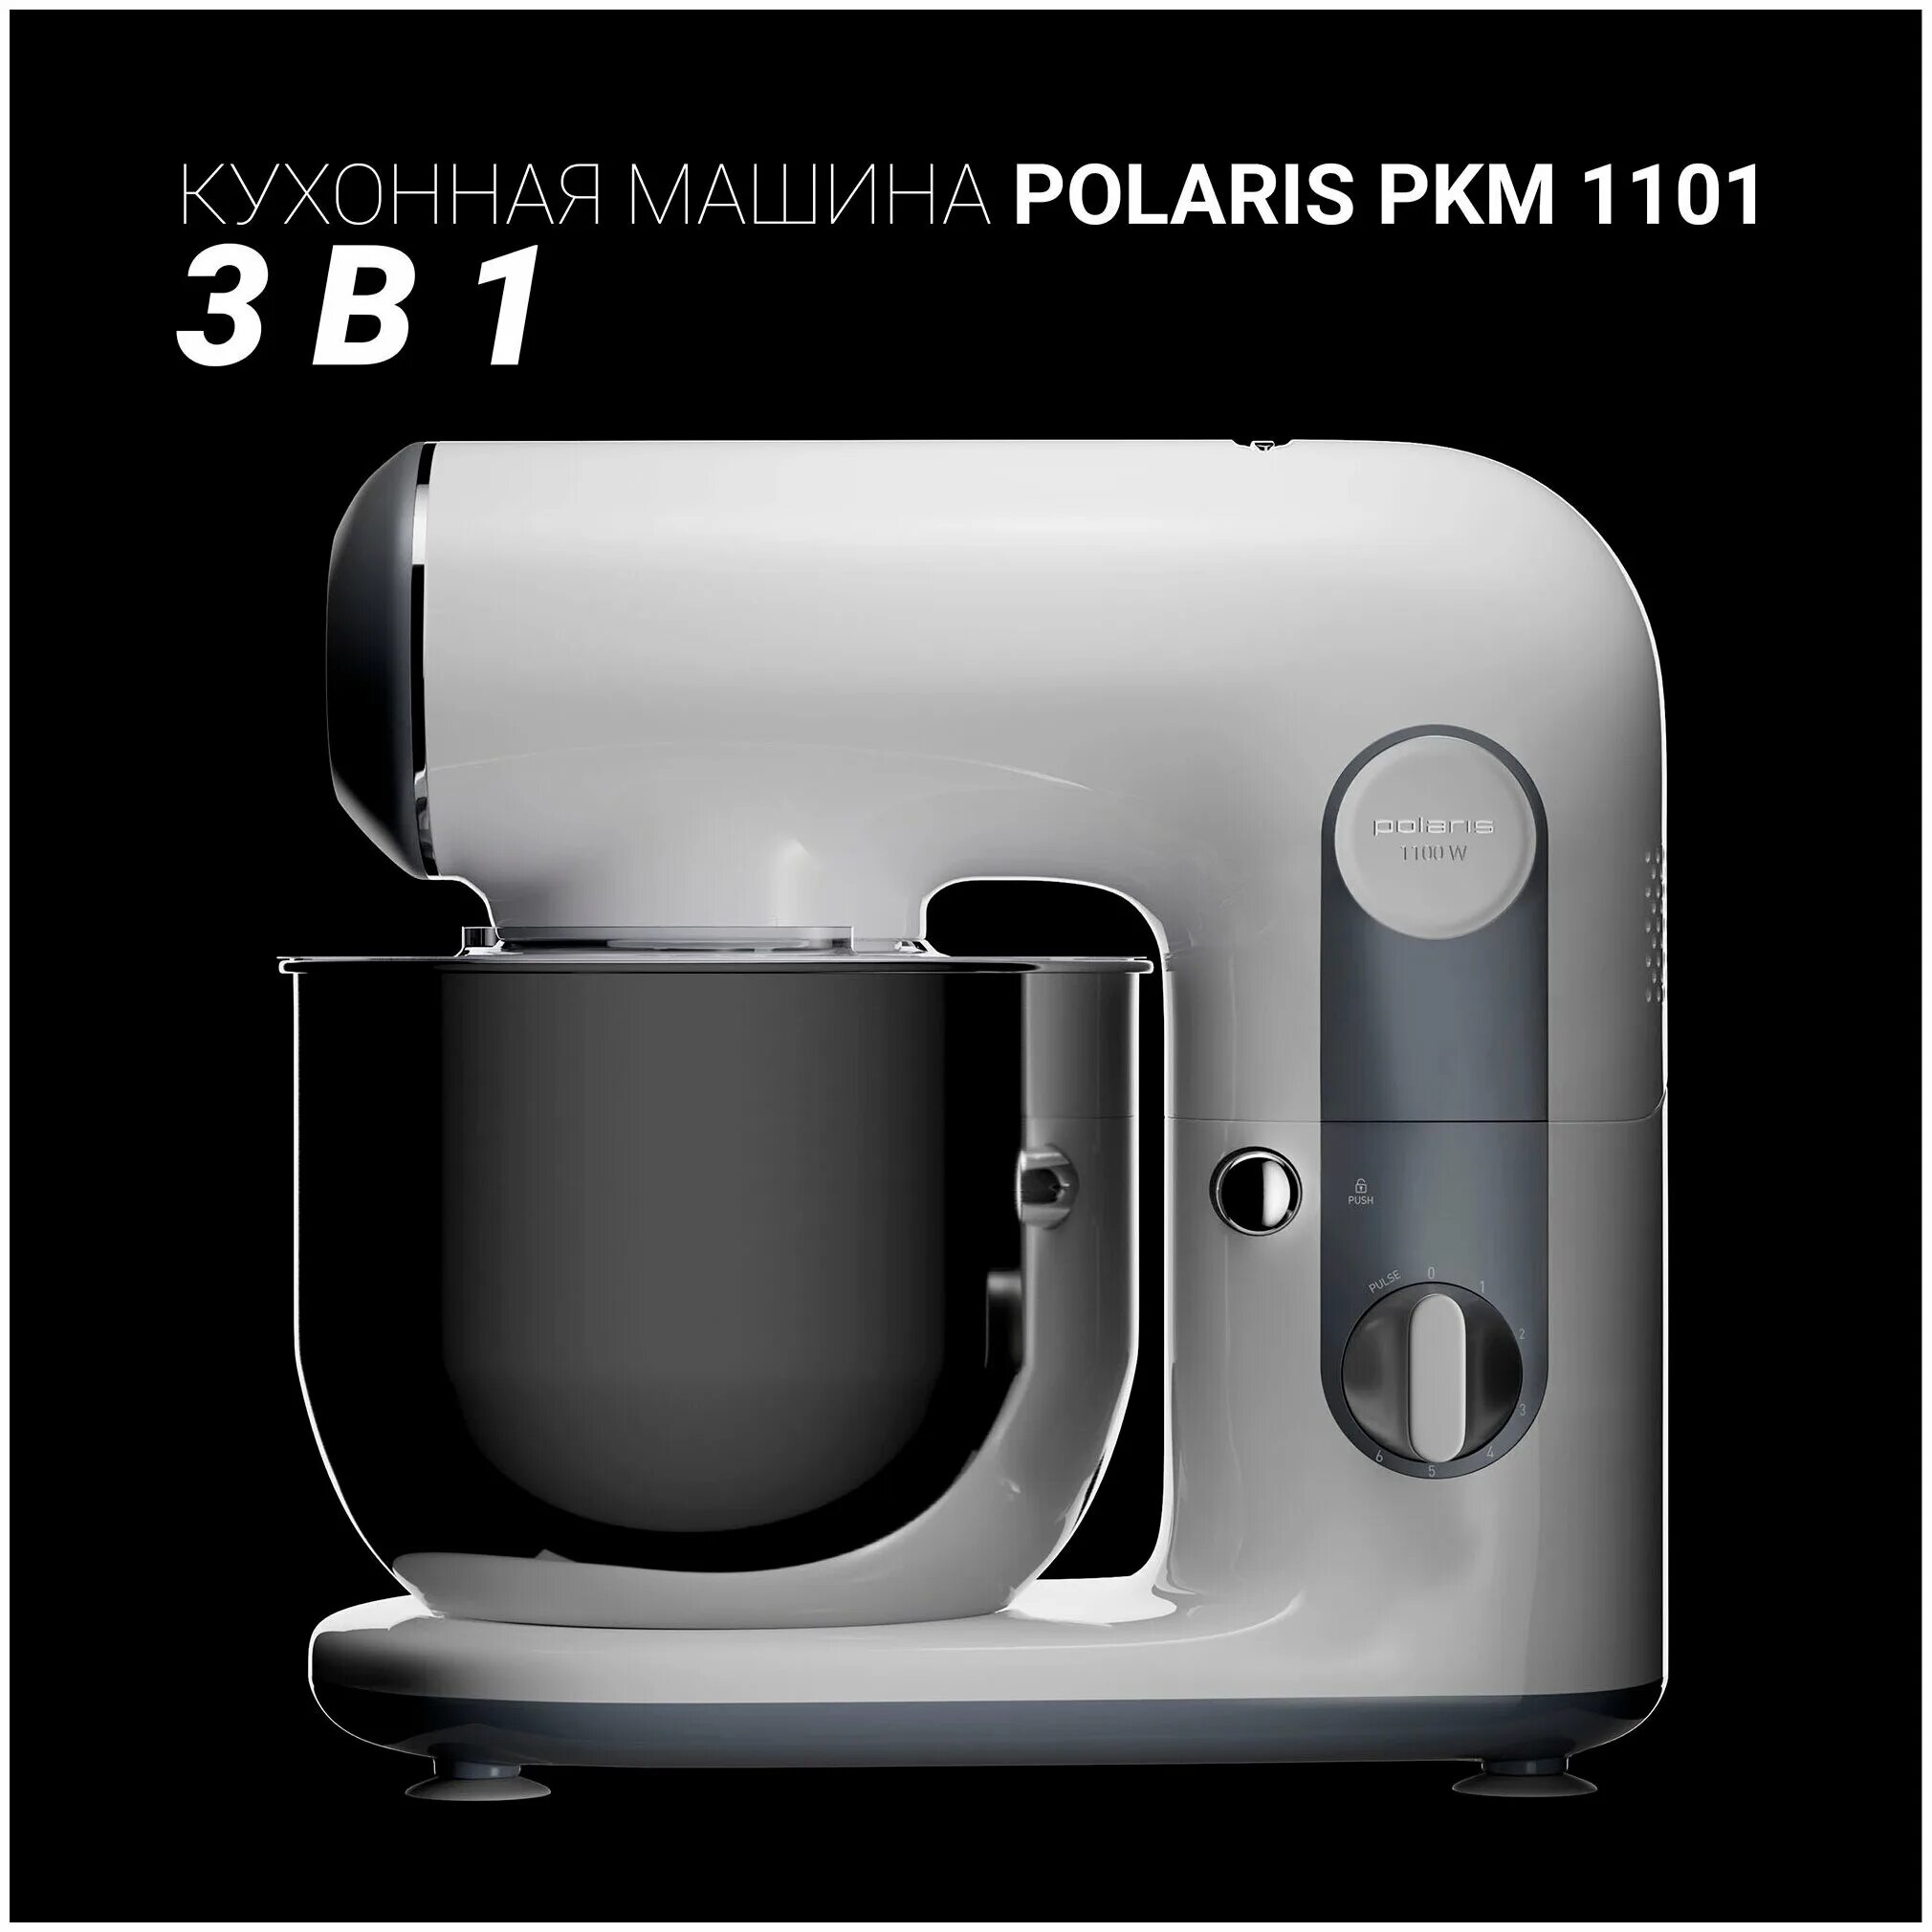 Кухонная машина polaris pkm